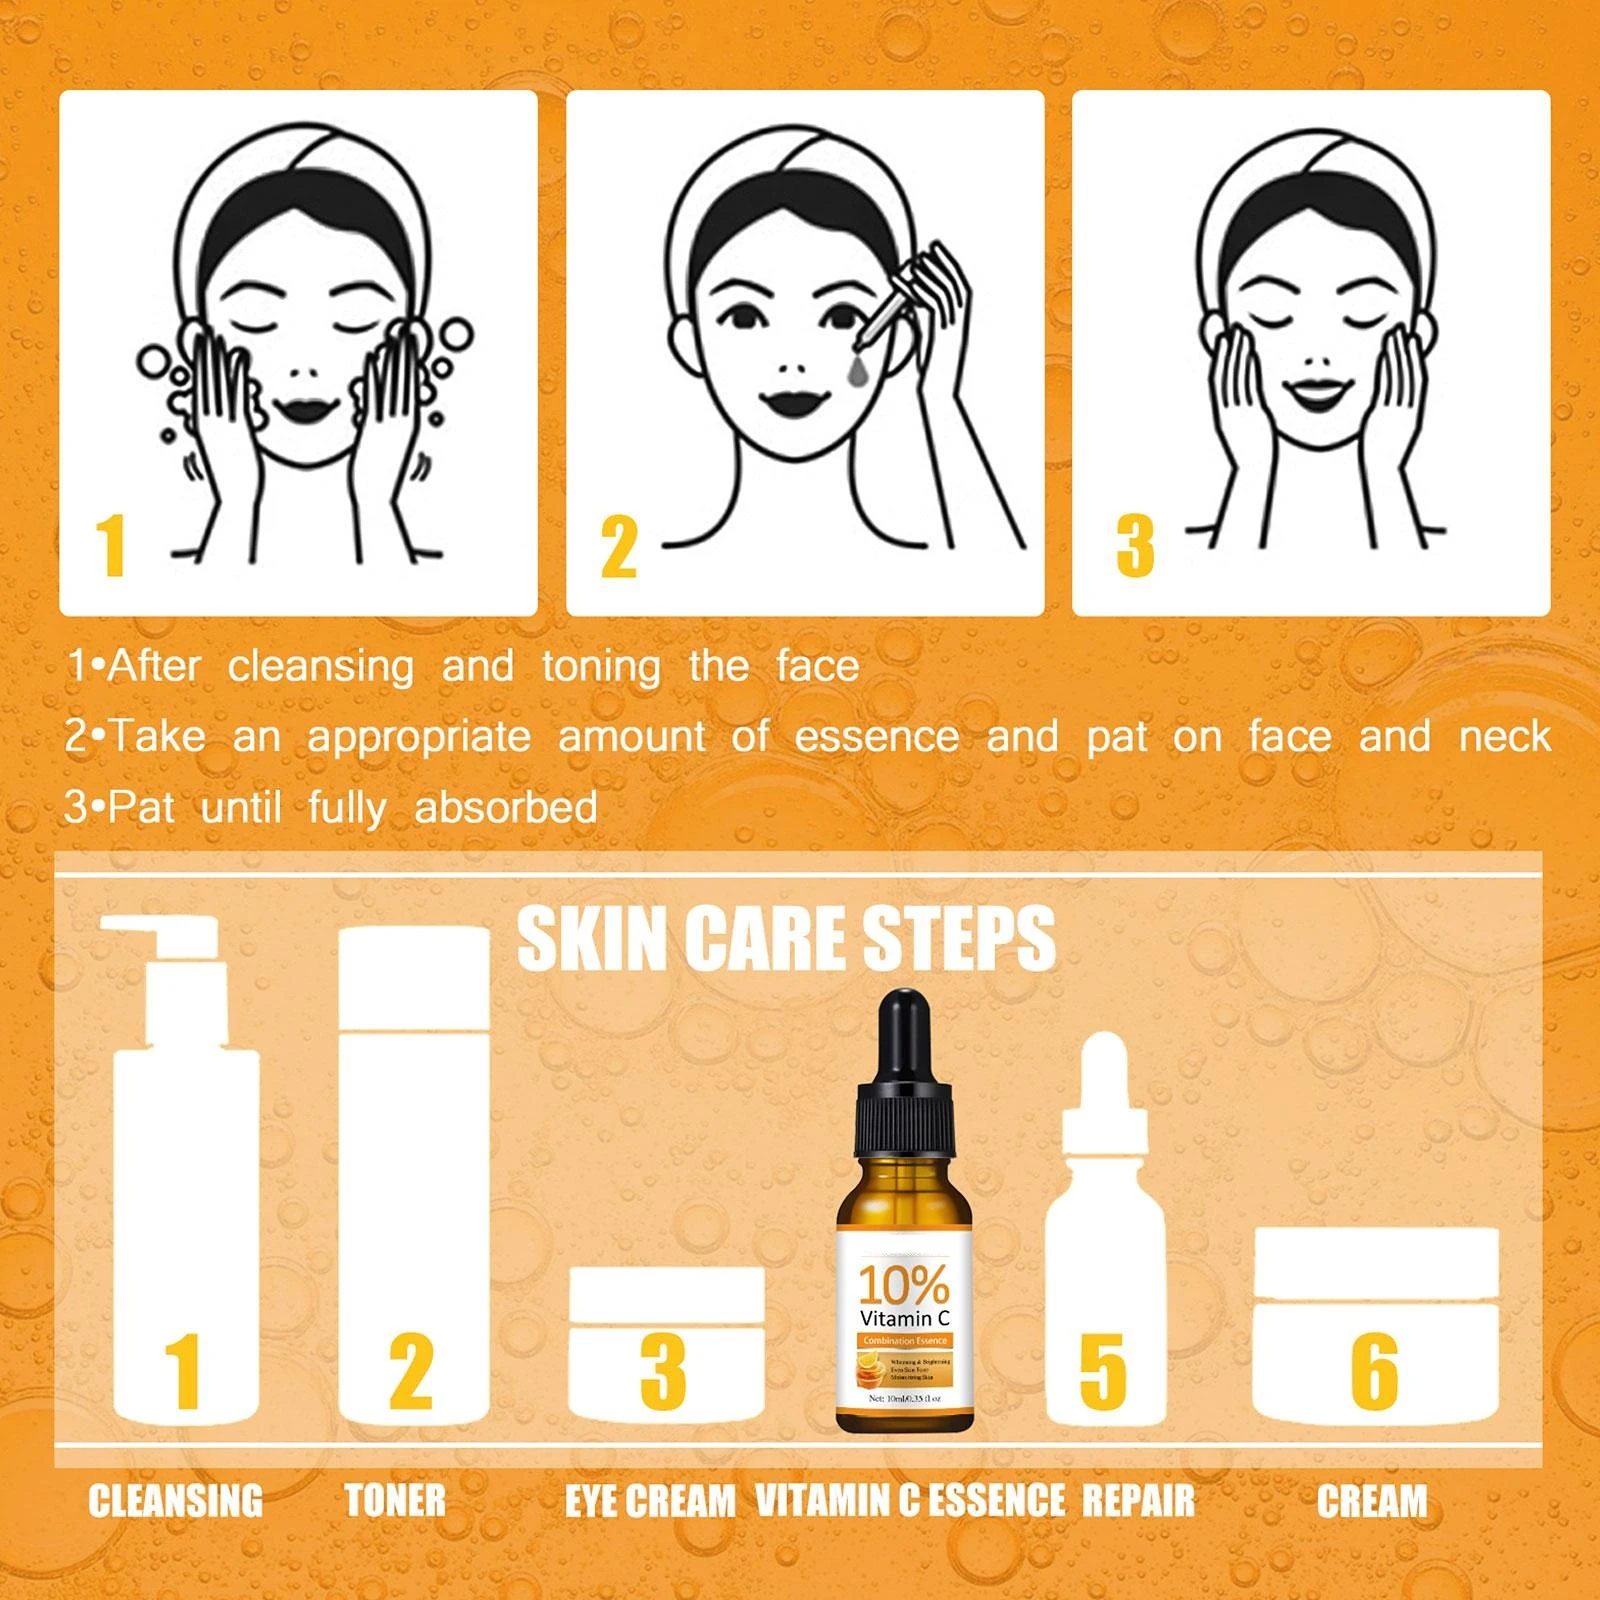 S928743571df64c78be80407dc4a61e4dU Vitamin C Serum for Face Whitening Facial Serum Hyaluronic Acid Dark Spot Remover Korean Skin Care Products Skincare